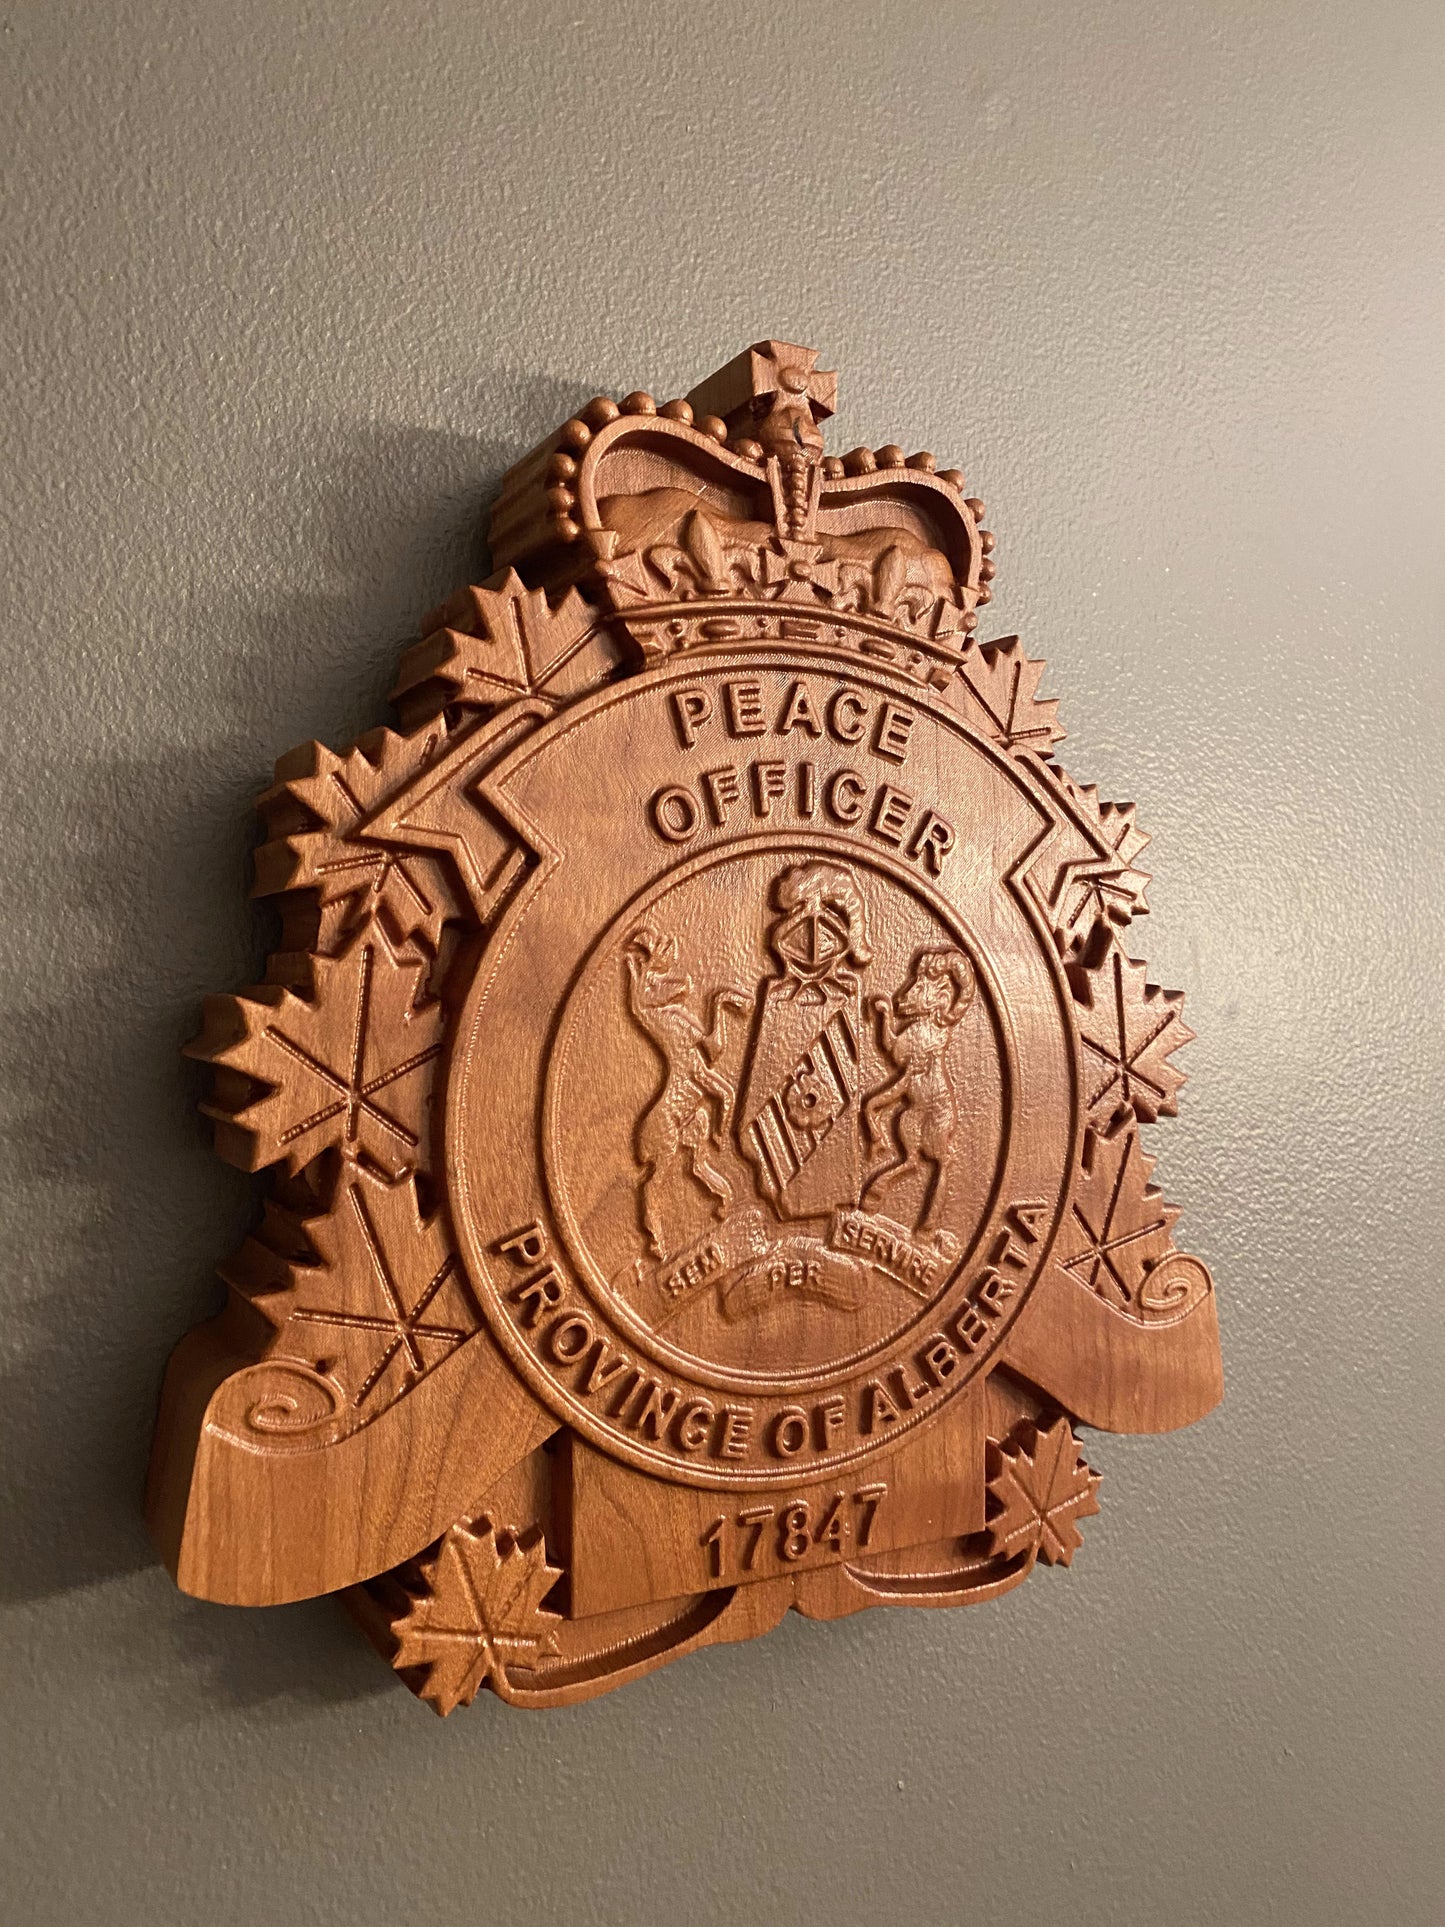 Alberta Community Peace Officer Wooden Badge